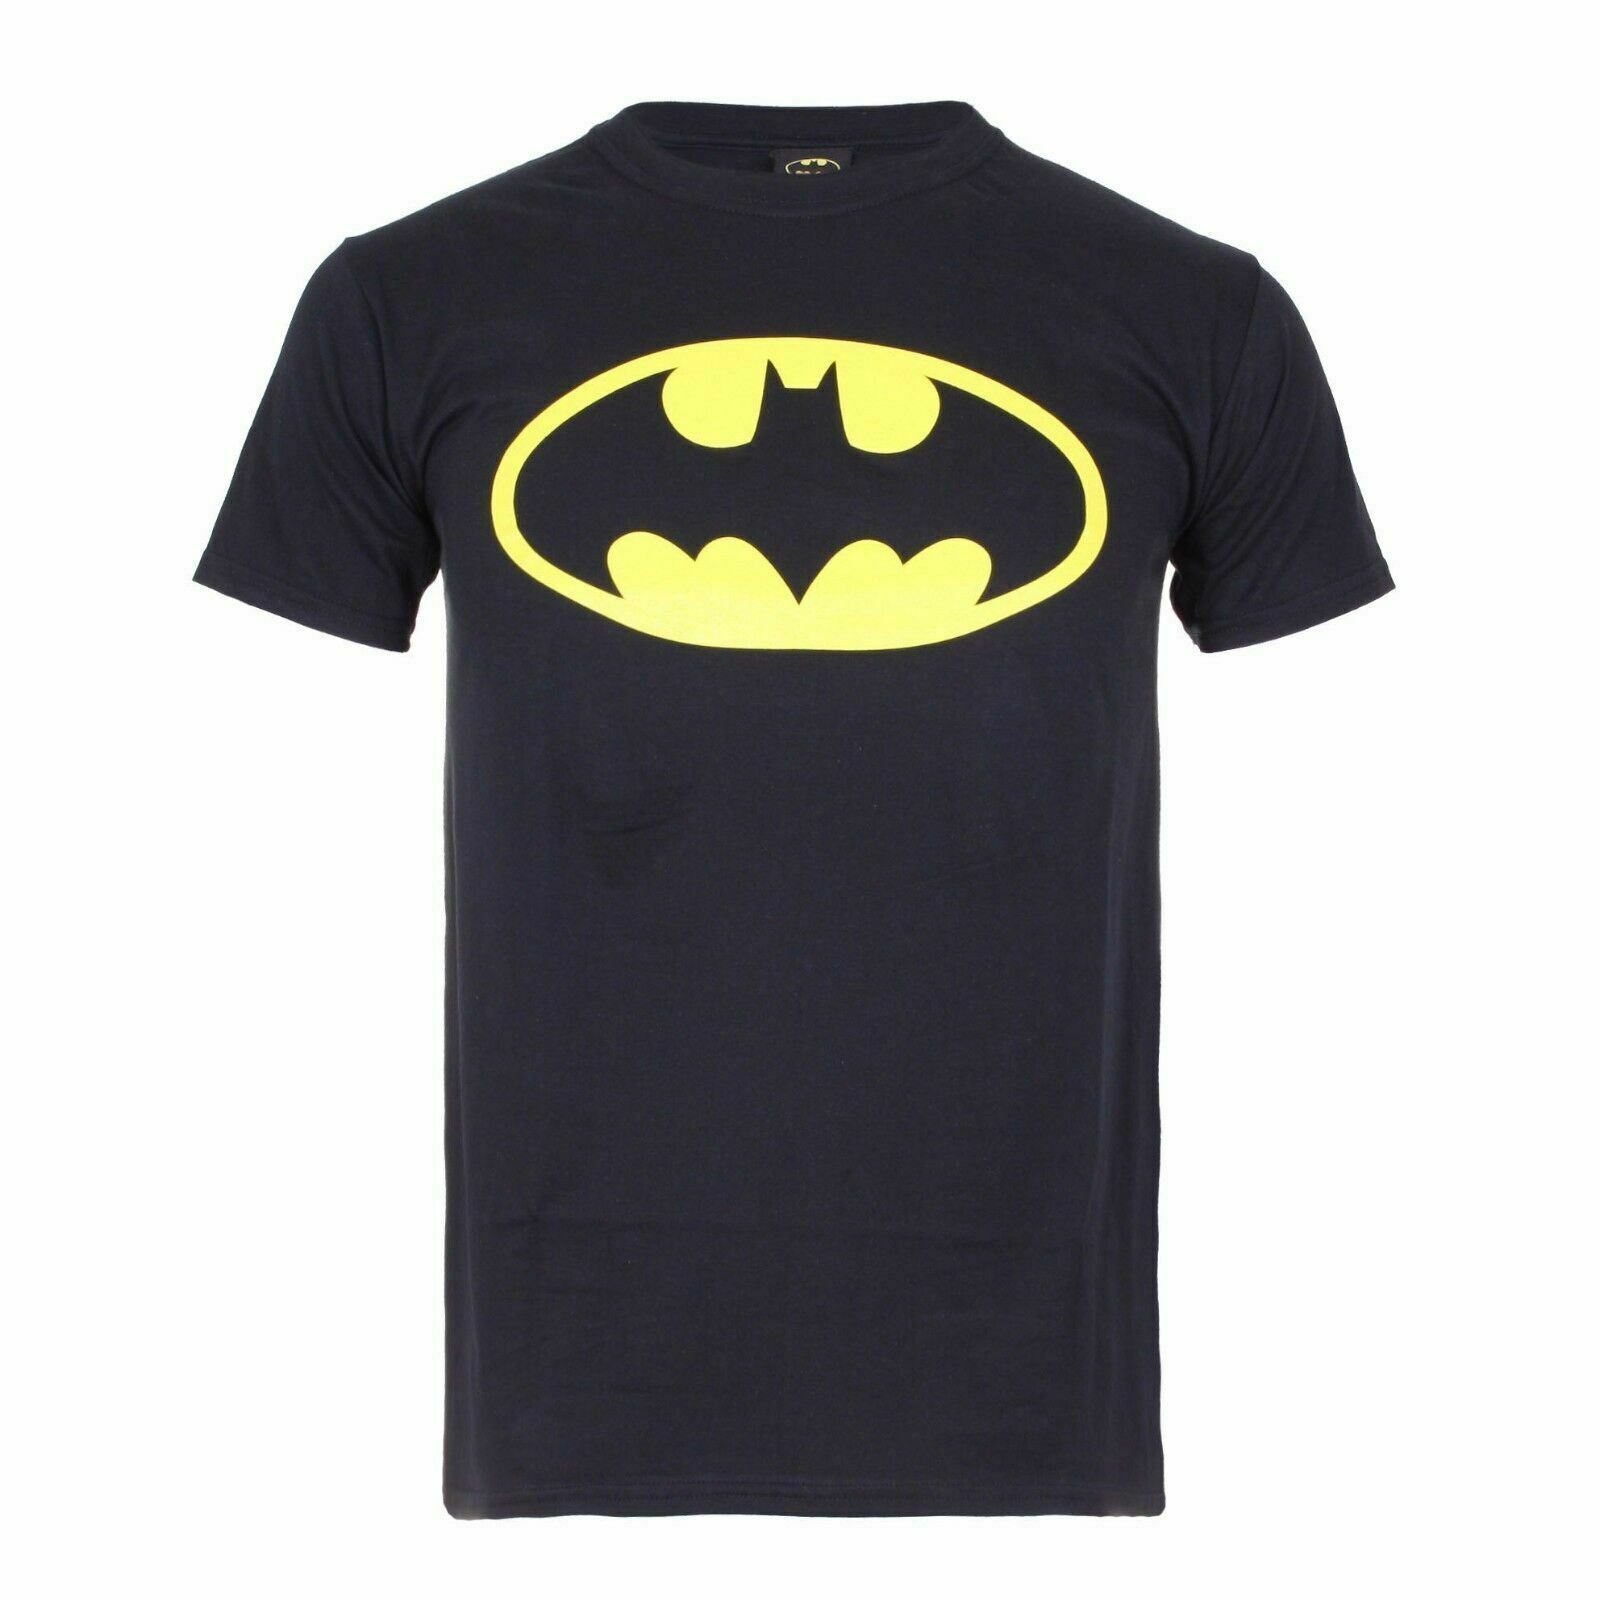 Official DC Comics Mens Batman Logo T-shirt Black Sizes S - XXL | eBay